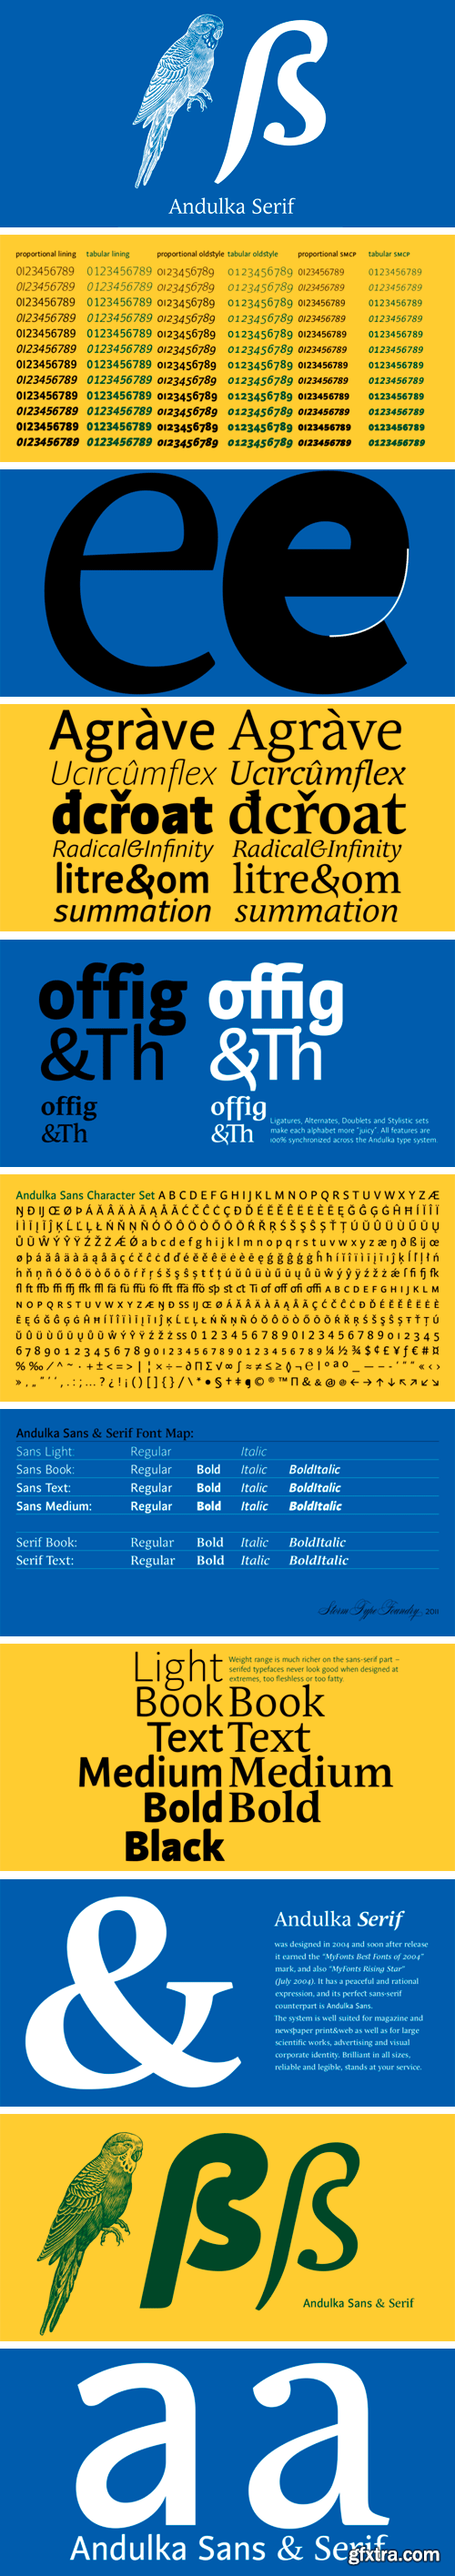 Andulka Serif Font Family